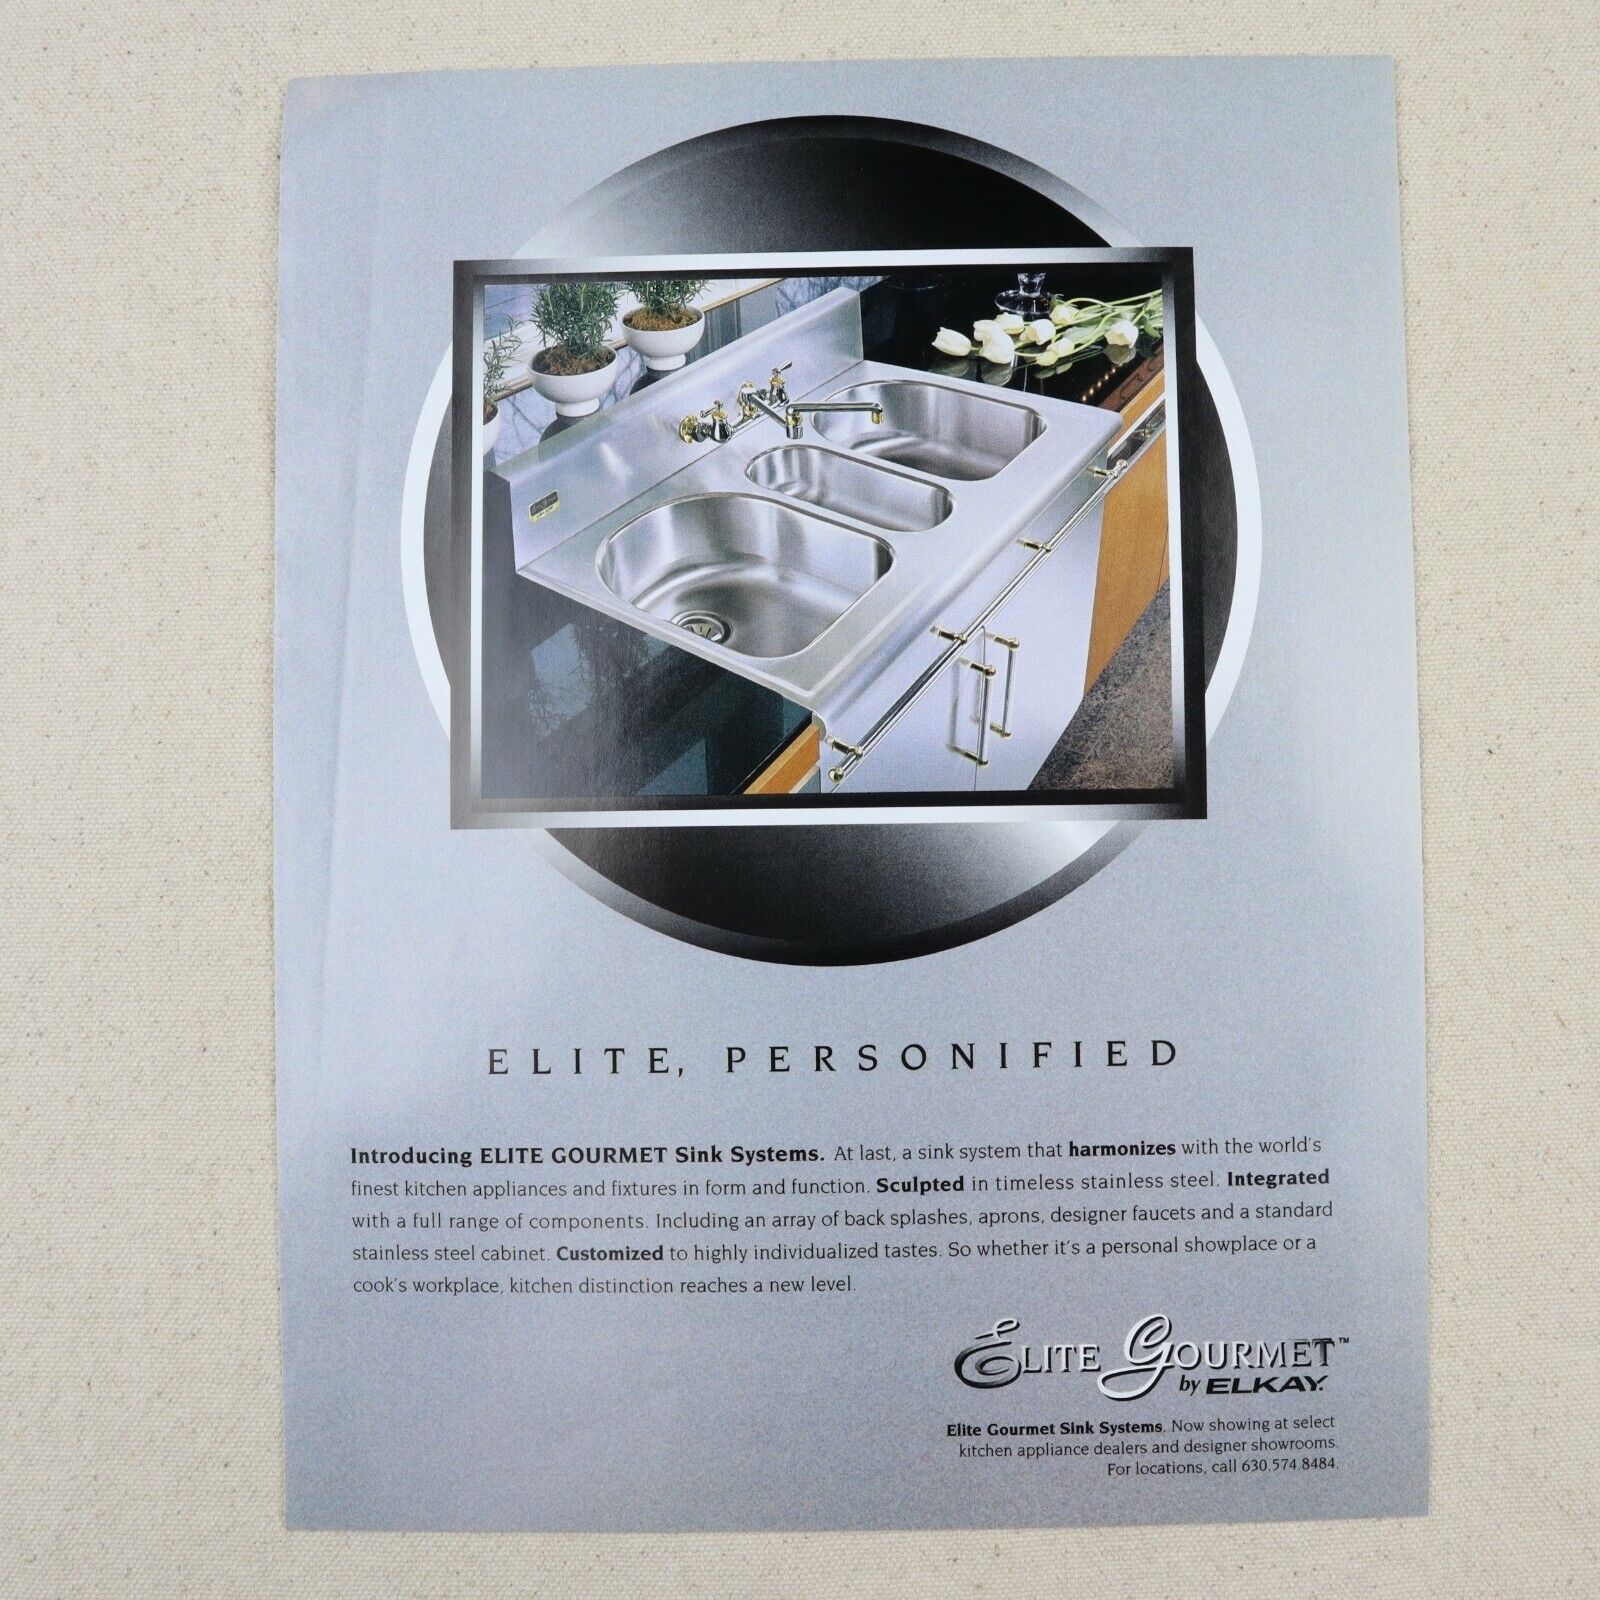 Vintage Elkay Print Ad 2000 Paper Magazine Clipping Retro Kitchen Elite Gourmet